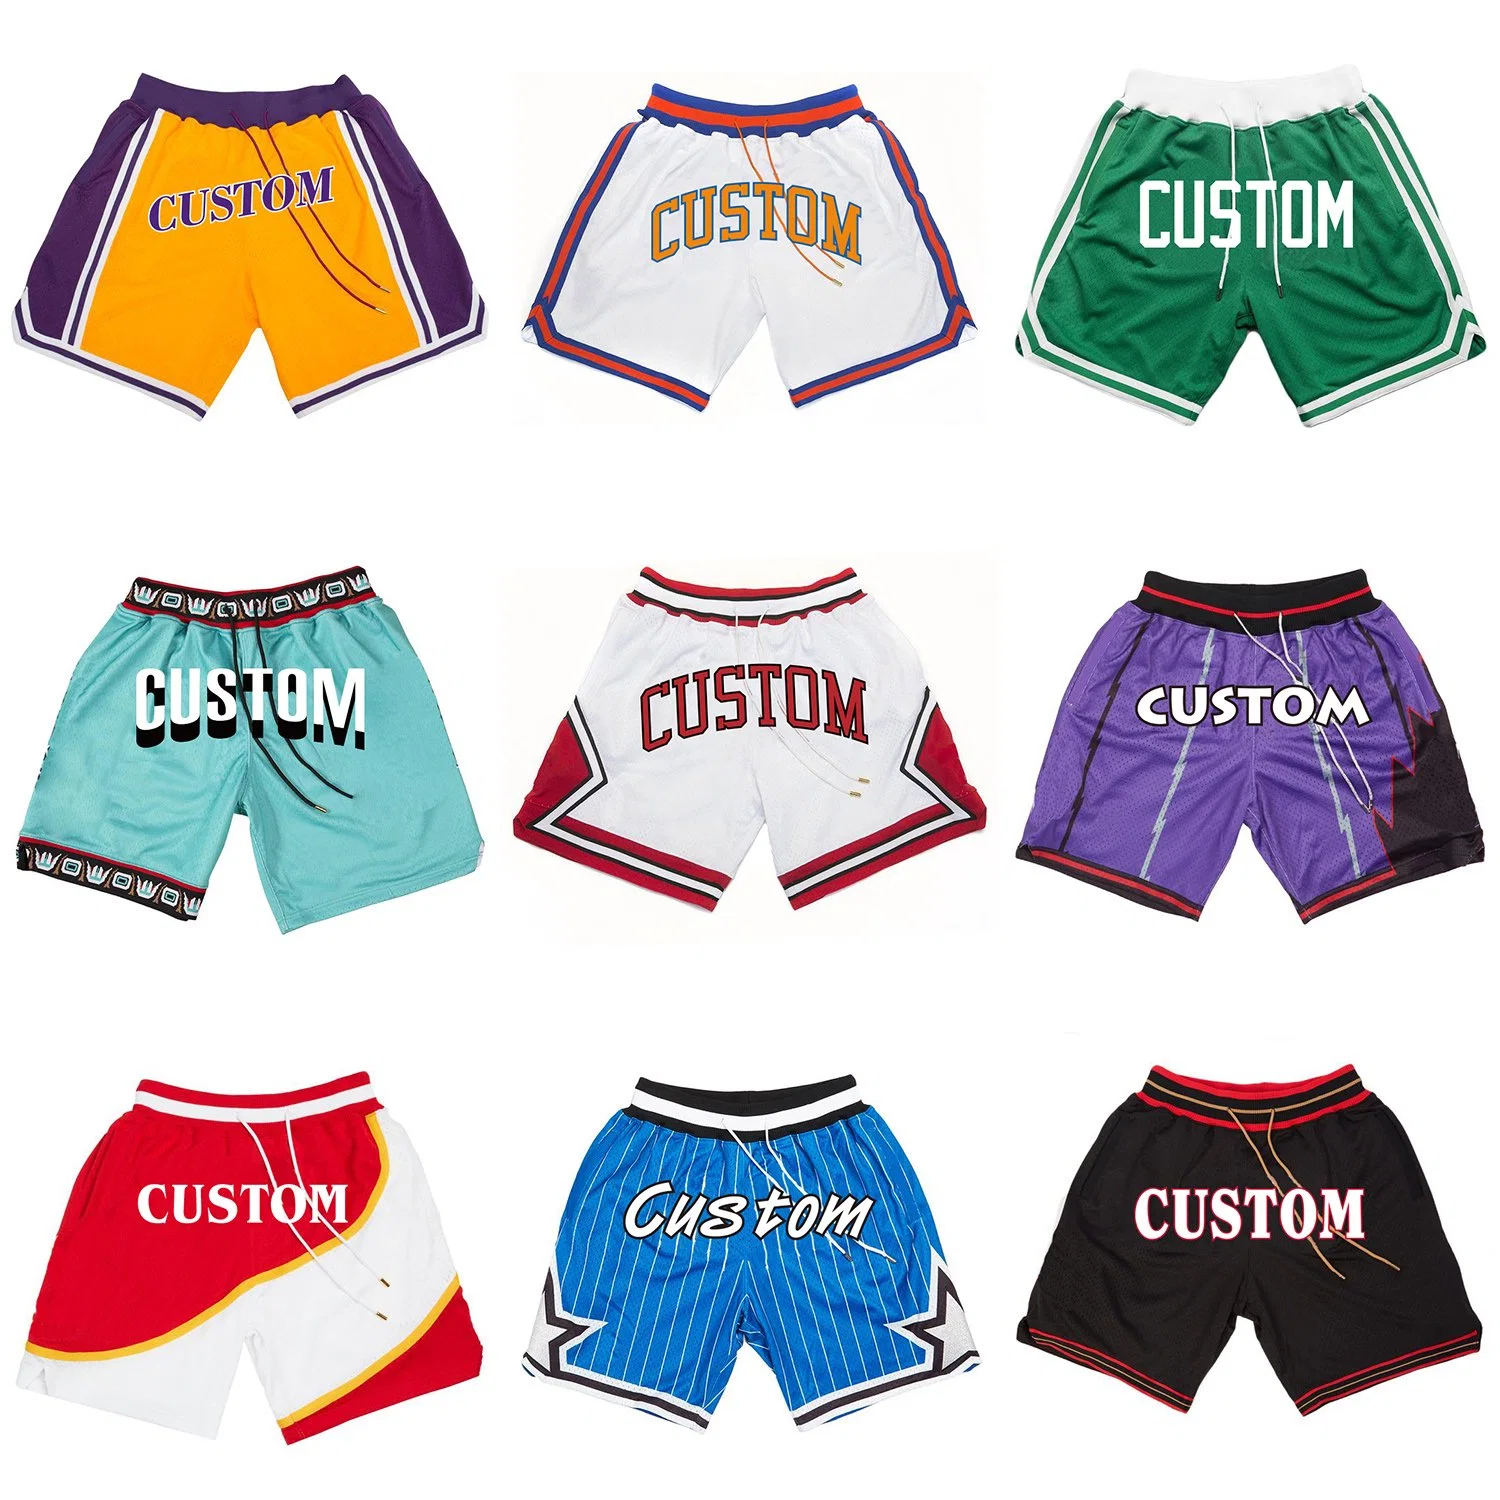 Personalisierbare Basketball Jersey Throwback Vintage Retro Mesh Shorts Sublimation Stickerei Herren′ Shorts